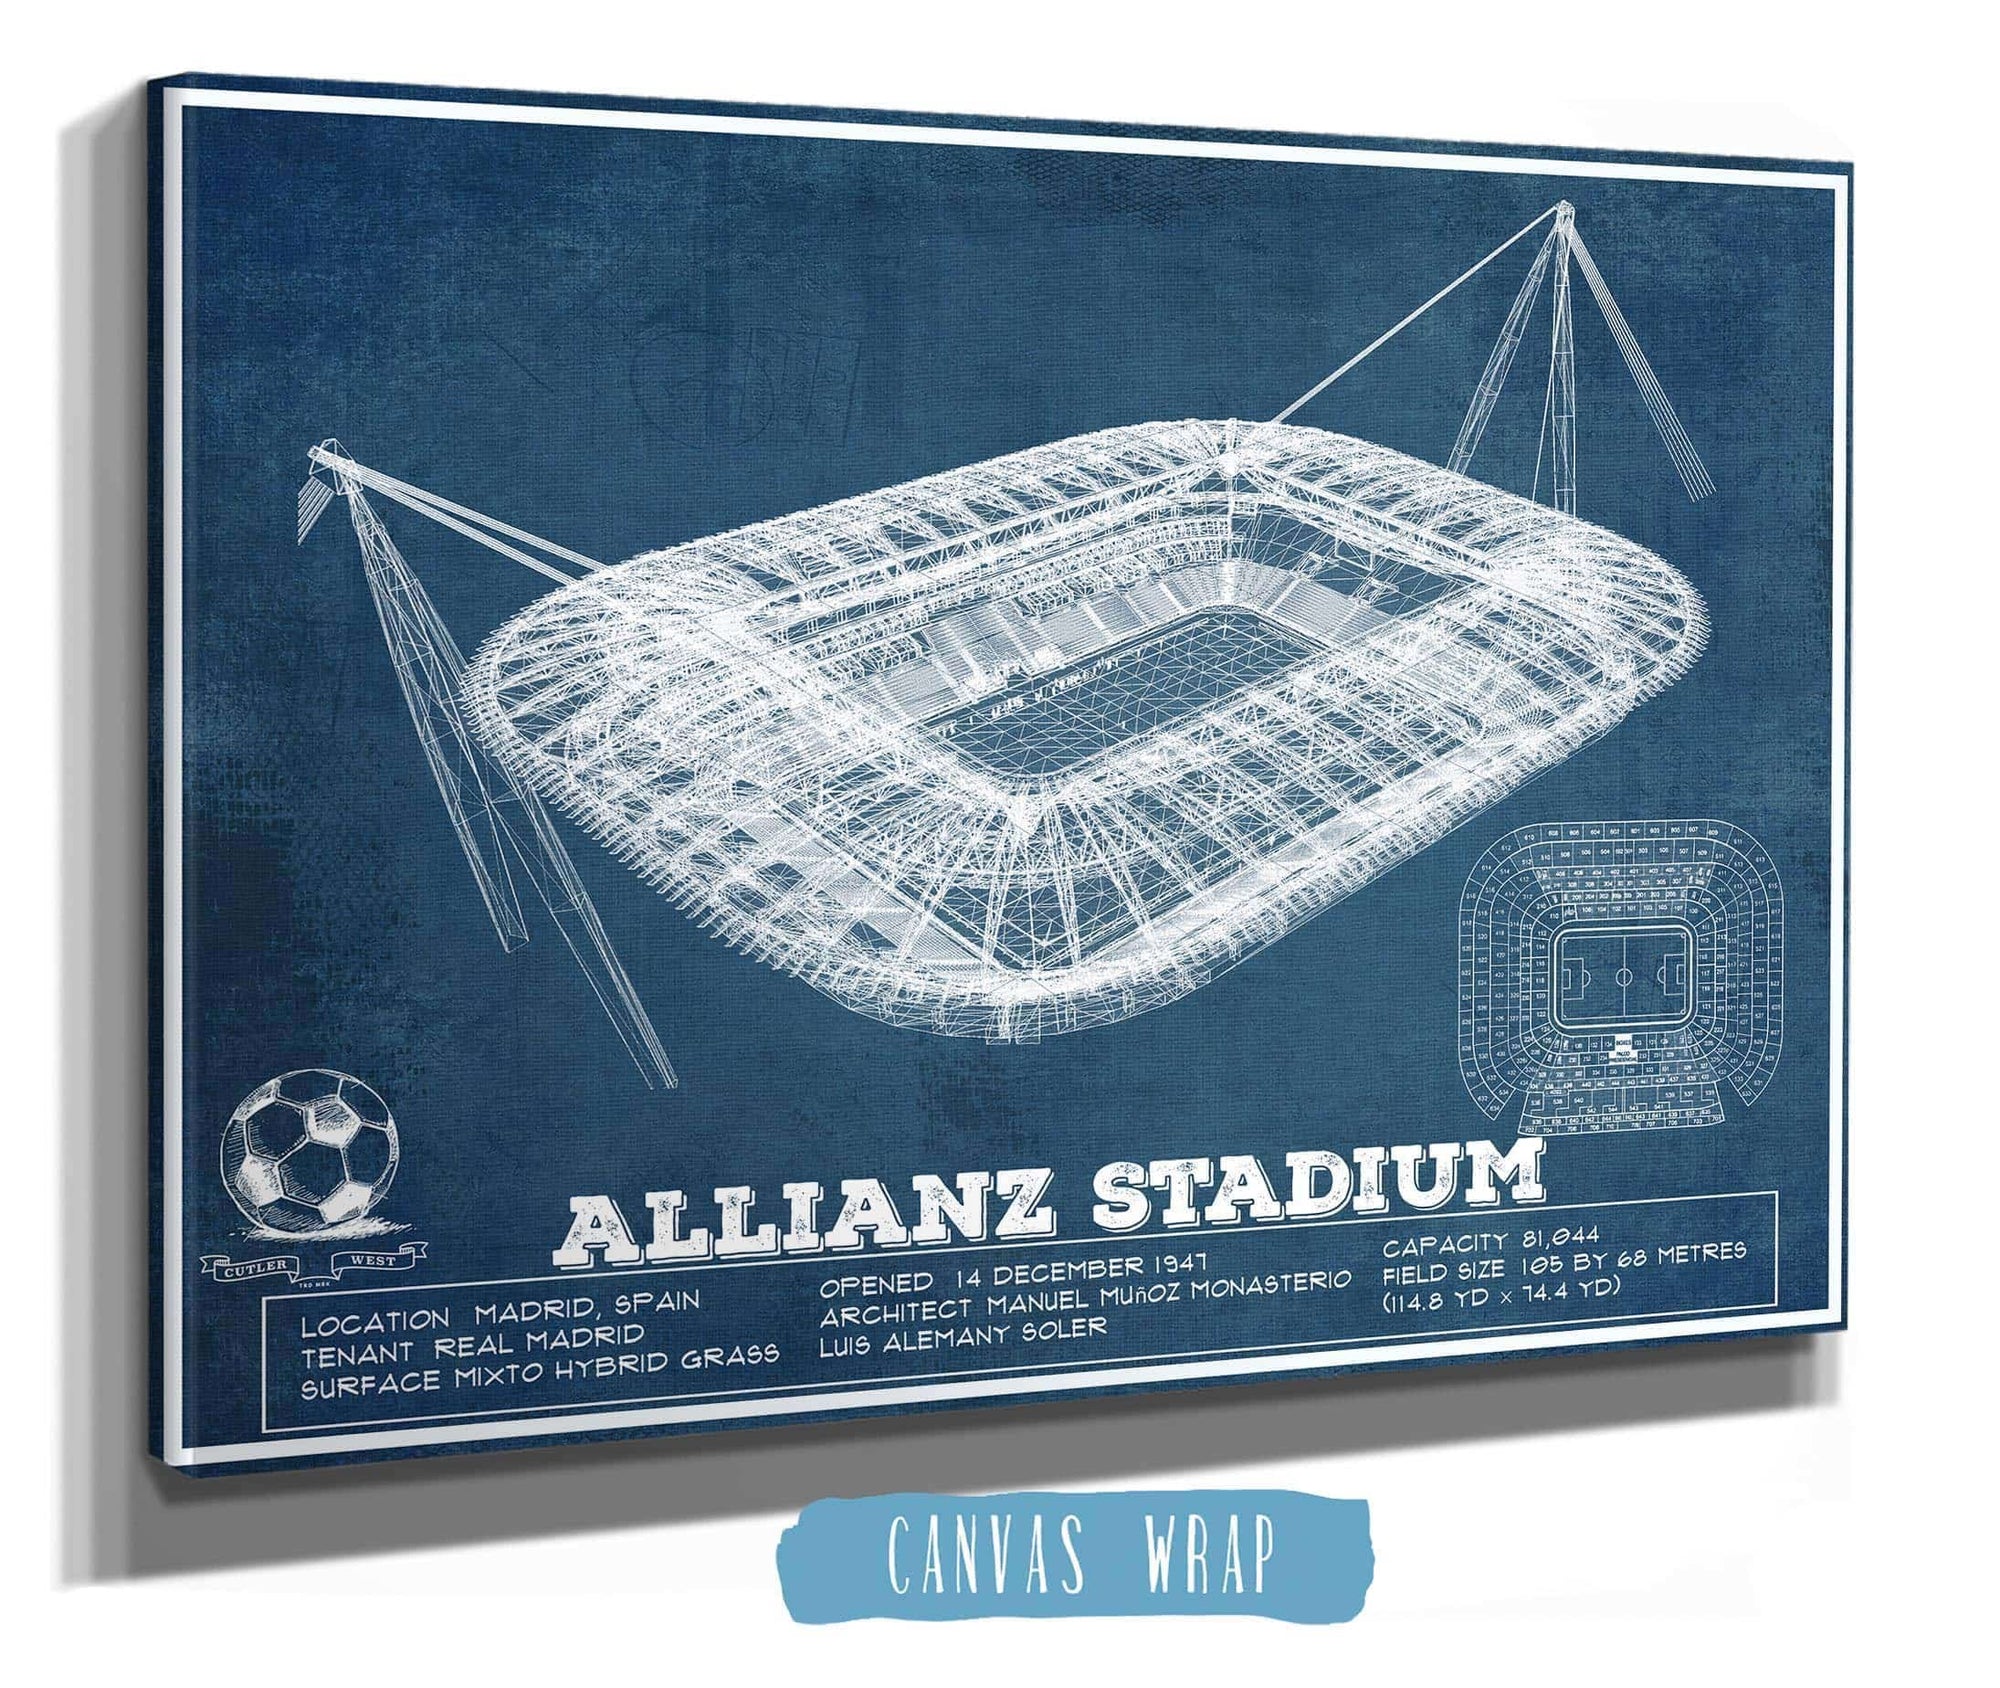 Cutler West Soccer Collection Juventus Football Club Allianz Stadium Stadium Soccer Print